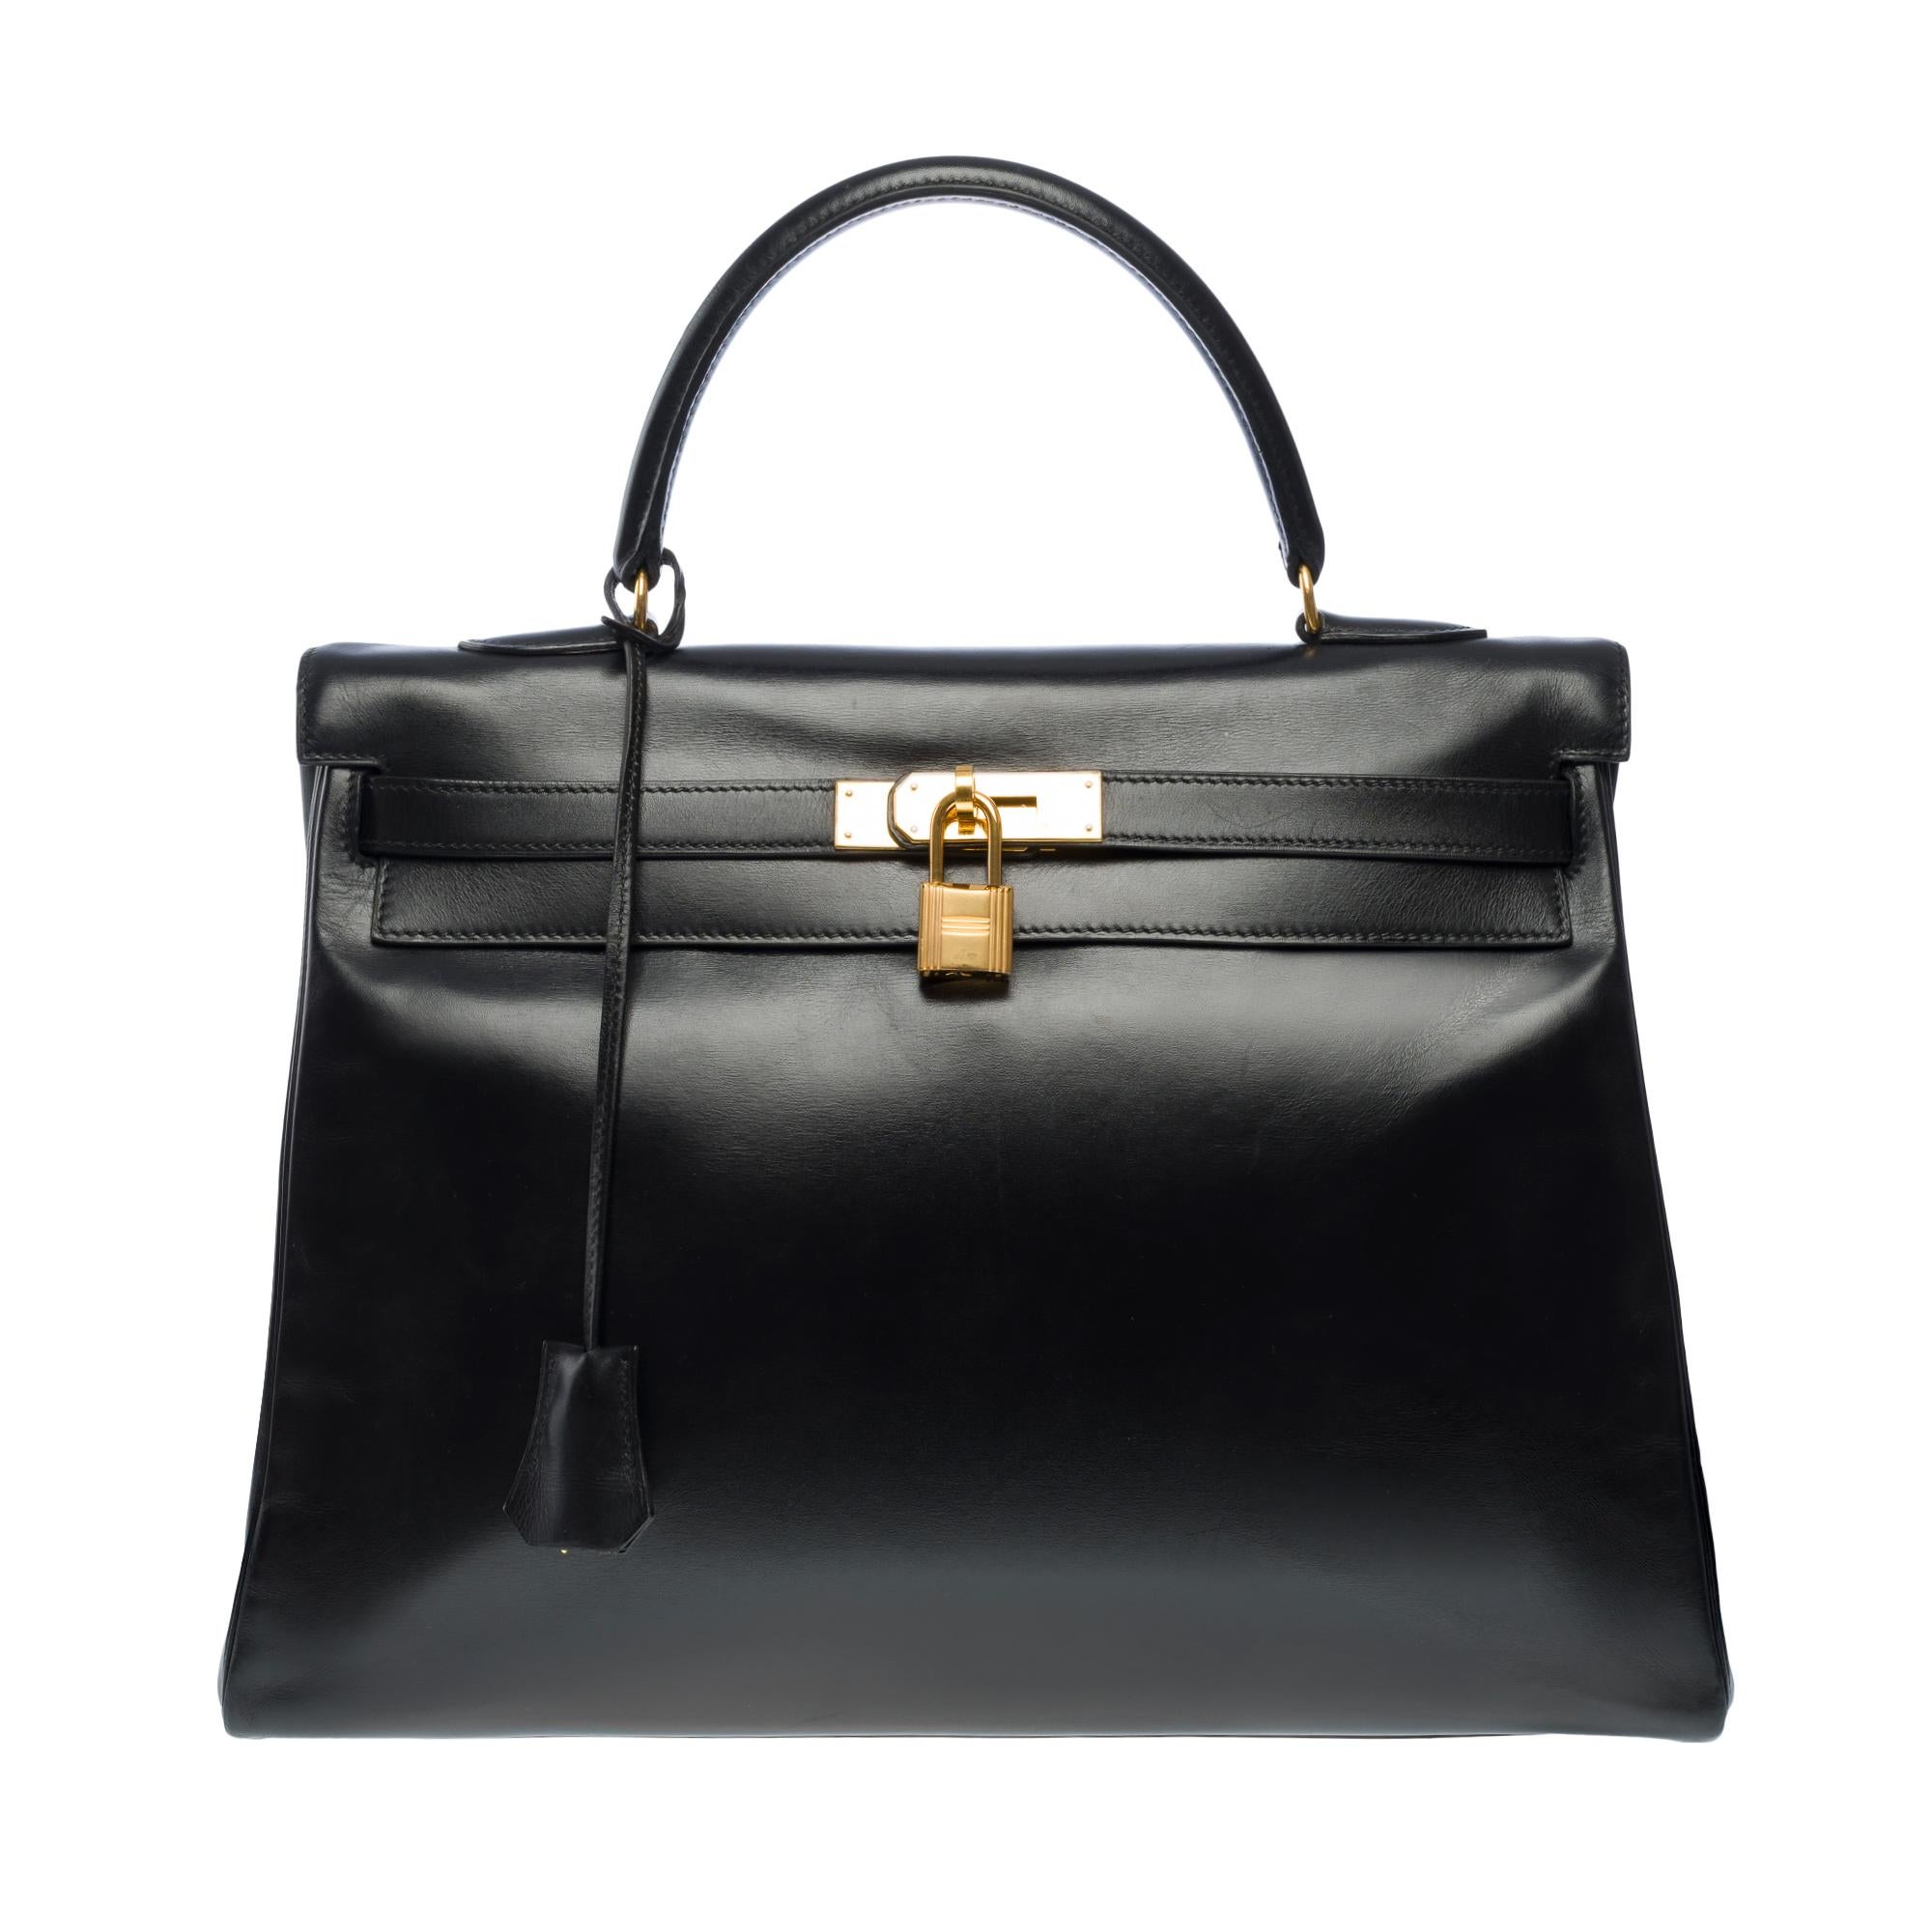 Women's or Men's Hermès Kelly 35 retourne handbag strap in black box calfskin leather, GHW